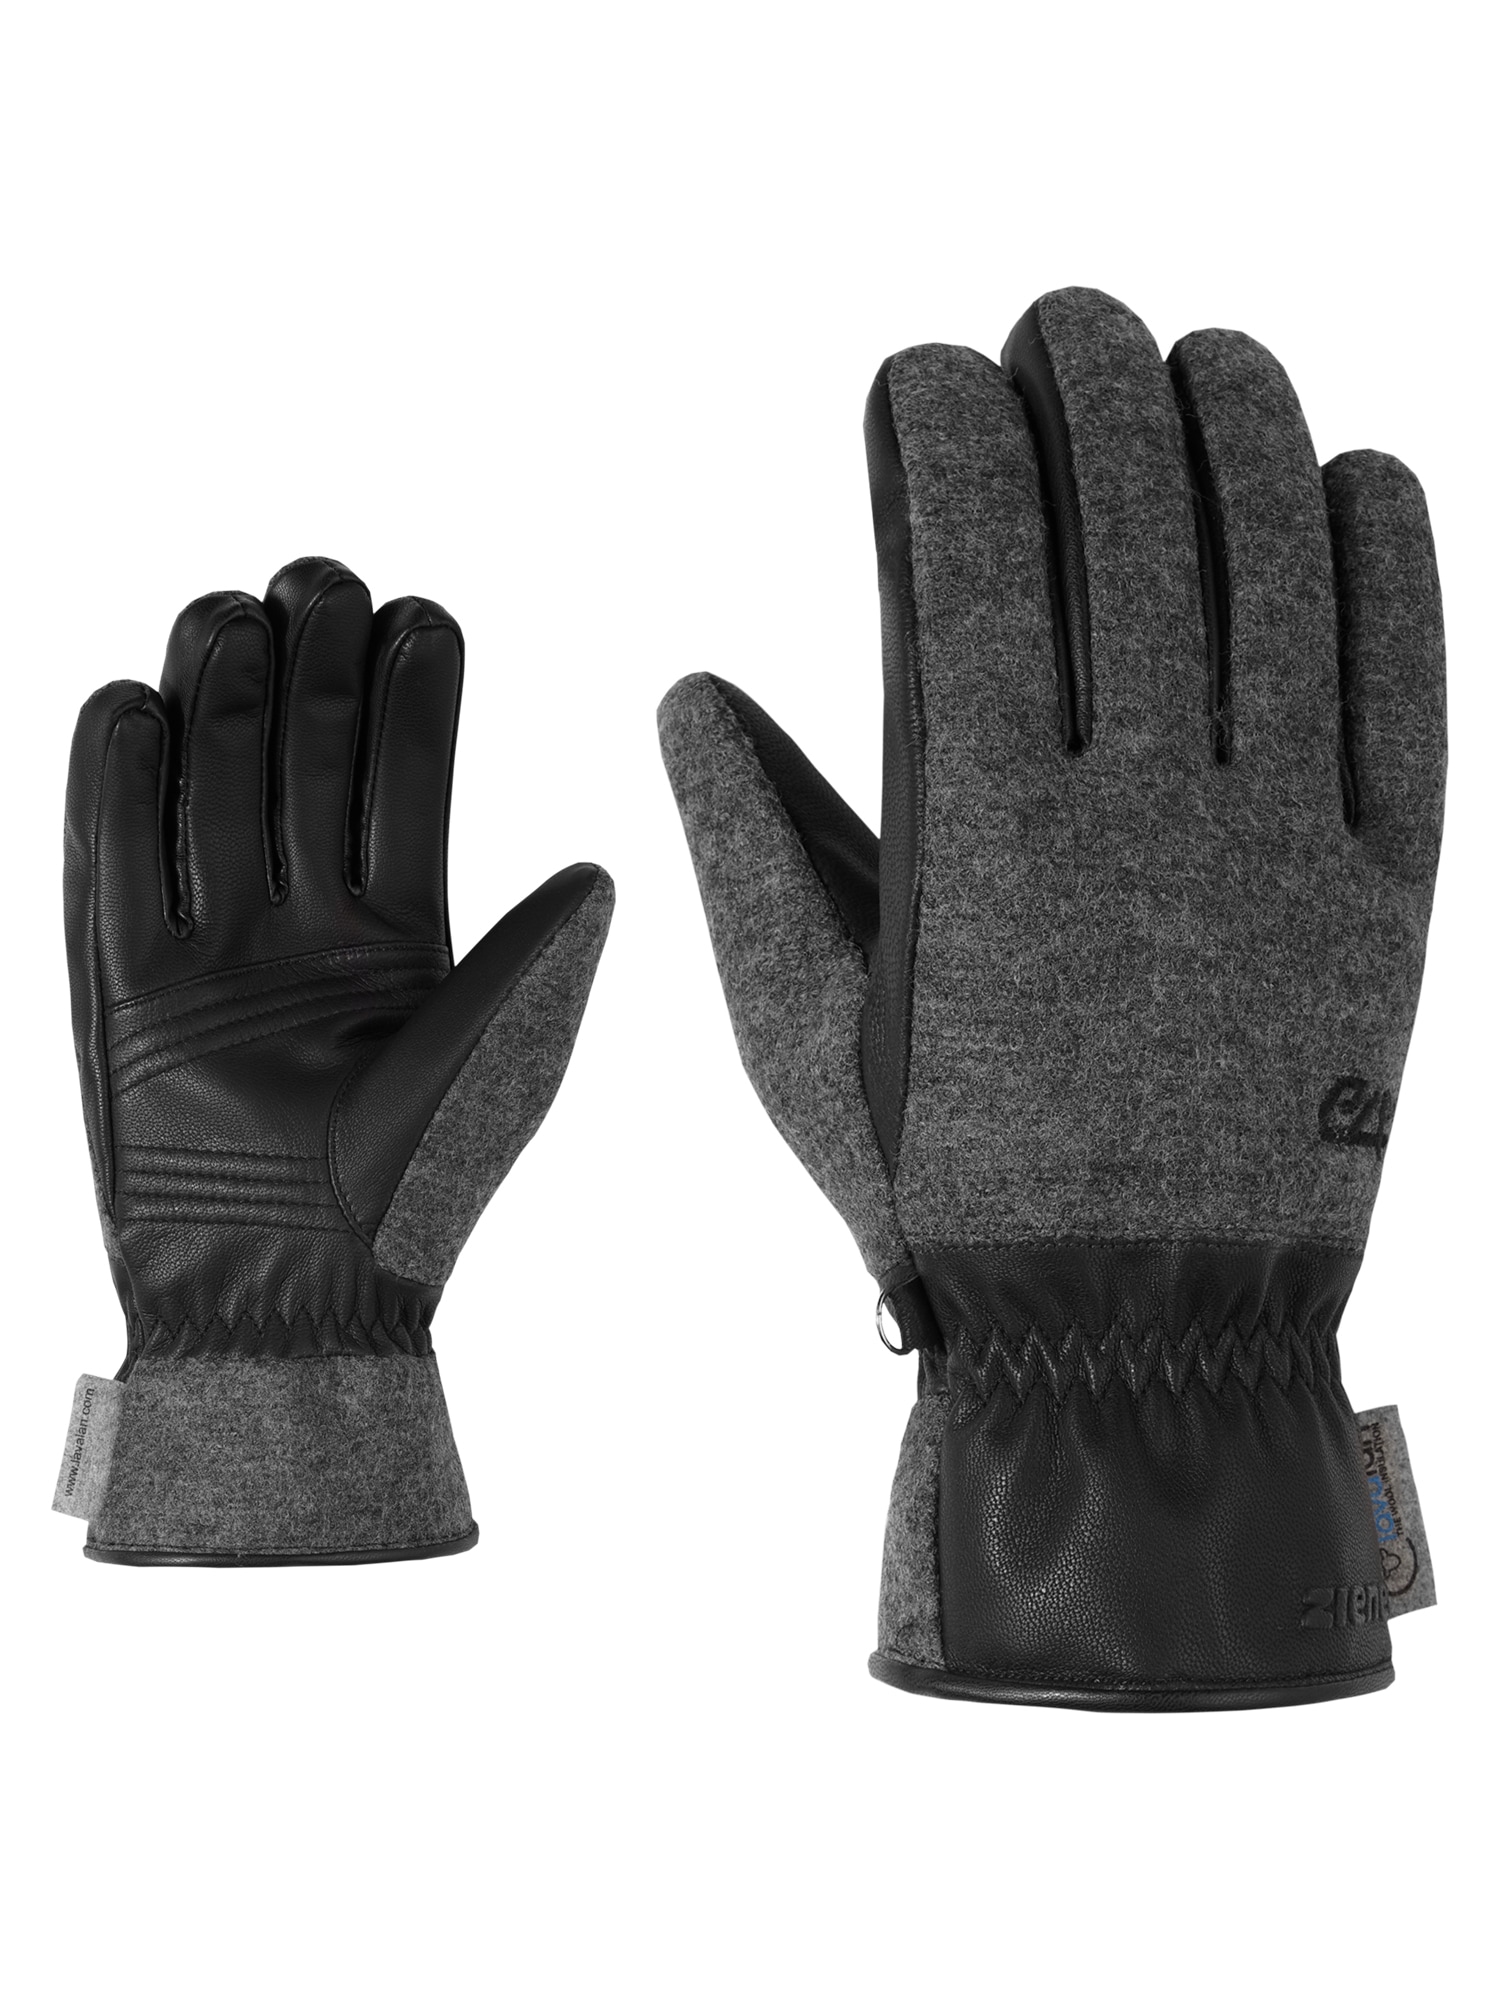 Handschuhe ➤ shoppen Mindestbestellwert ohne